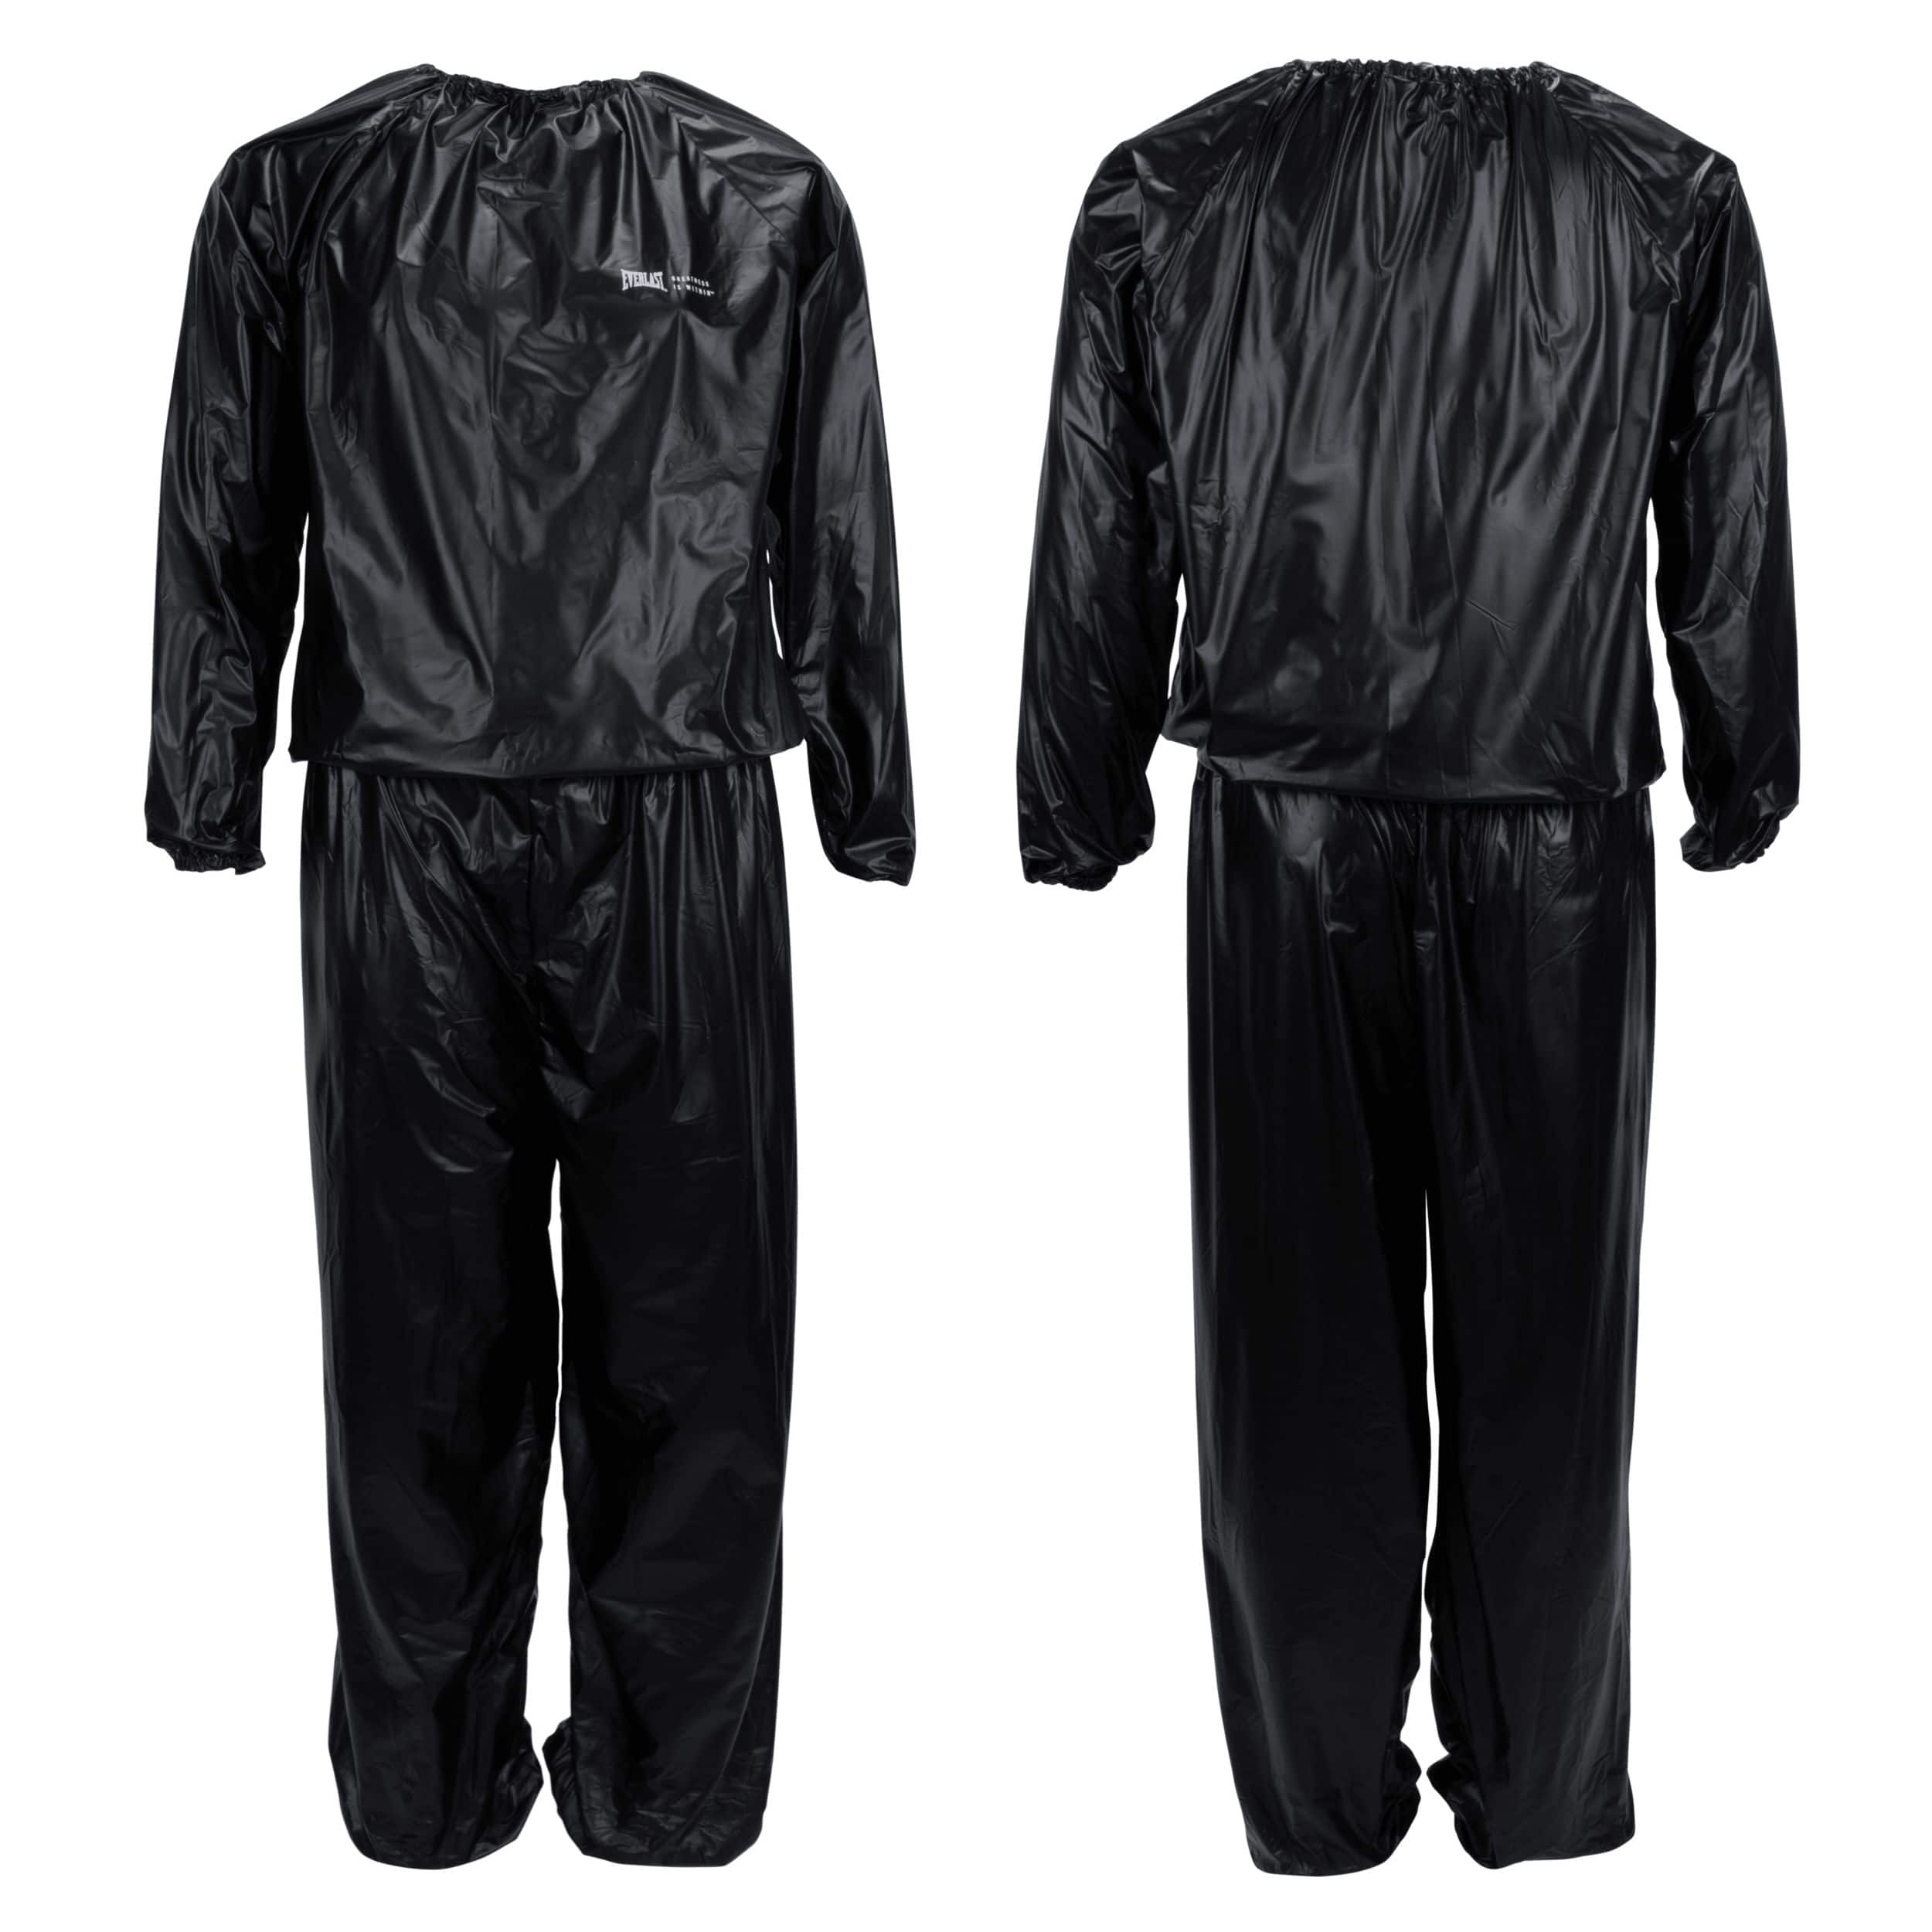 Everlast Hooded Sauna Suit - Large/X-Large - Black, Sauna Suits